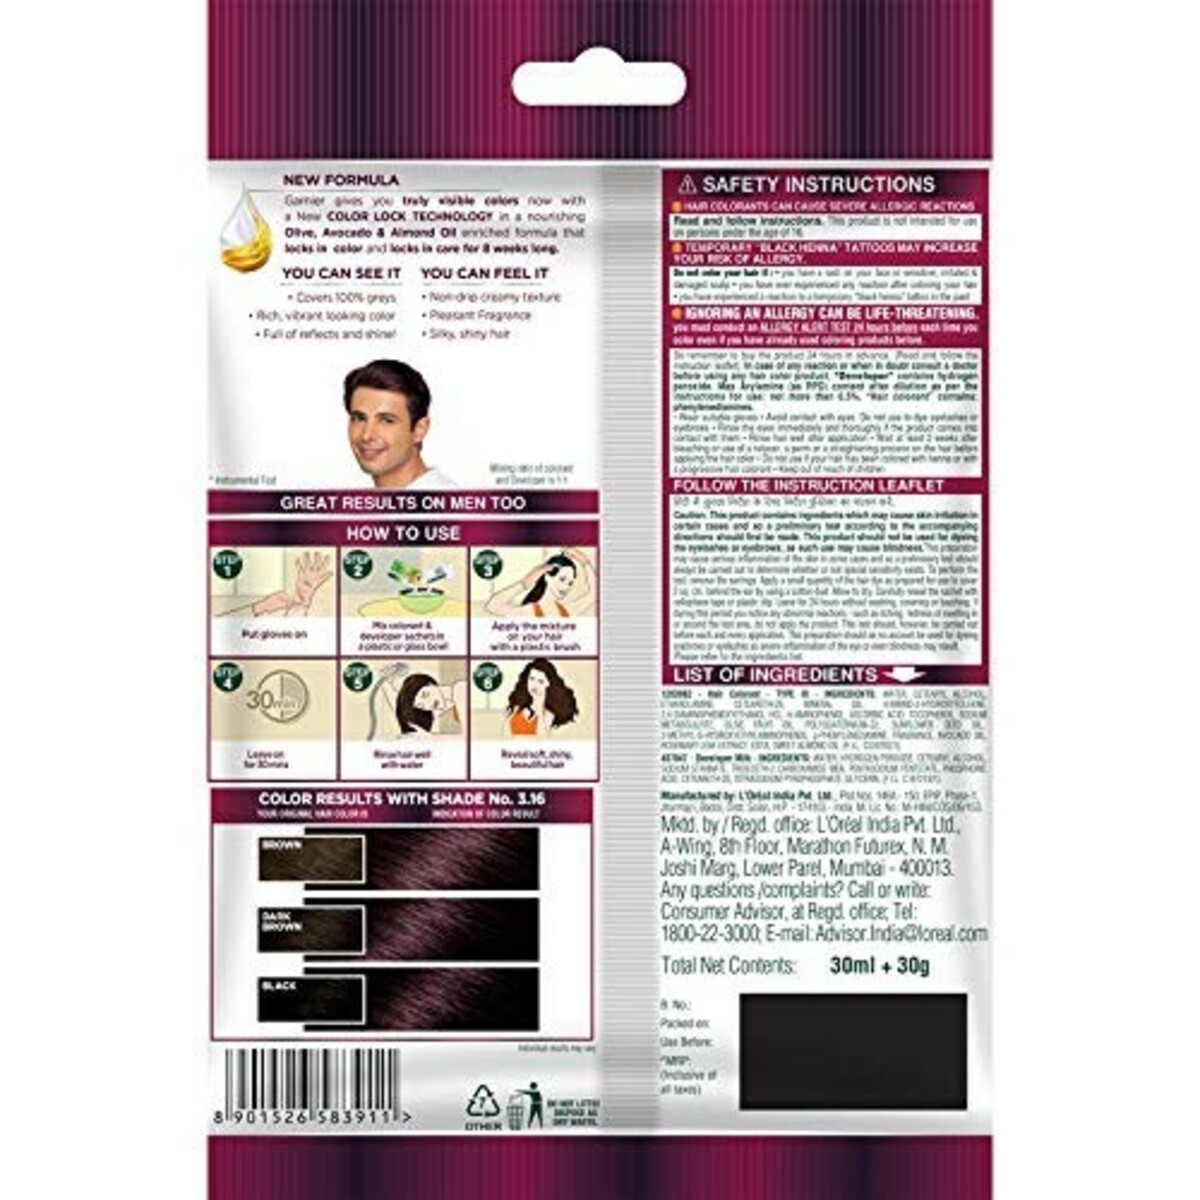 Garnier  Hair Color  Cream Naturals   Burgndy Sachet Shade  3.16